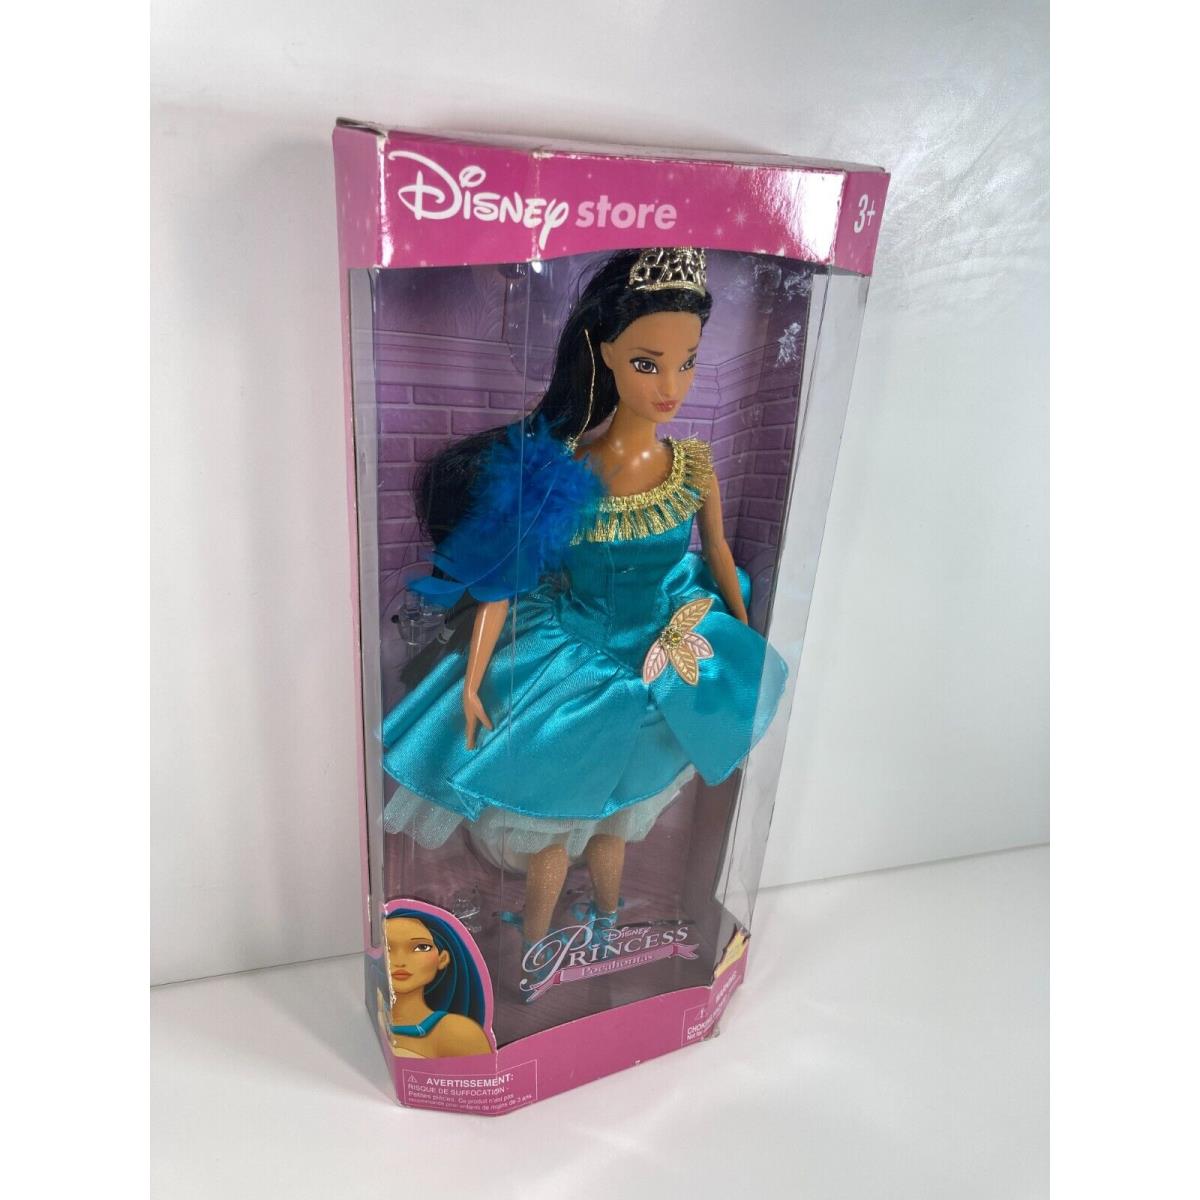 Disney Princess Pocahontas Ballerina Doll Disney Store Exclusive 2003